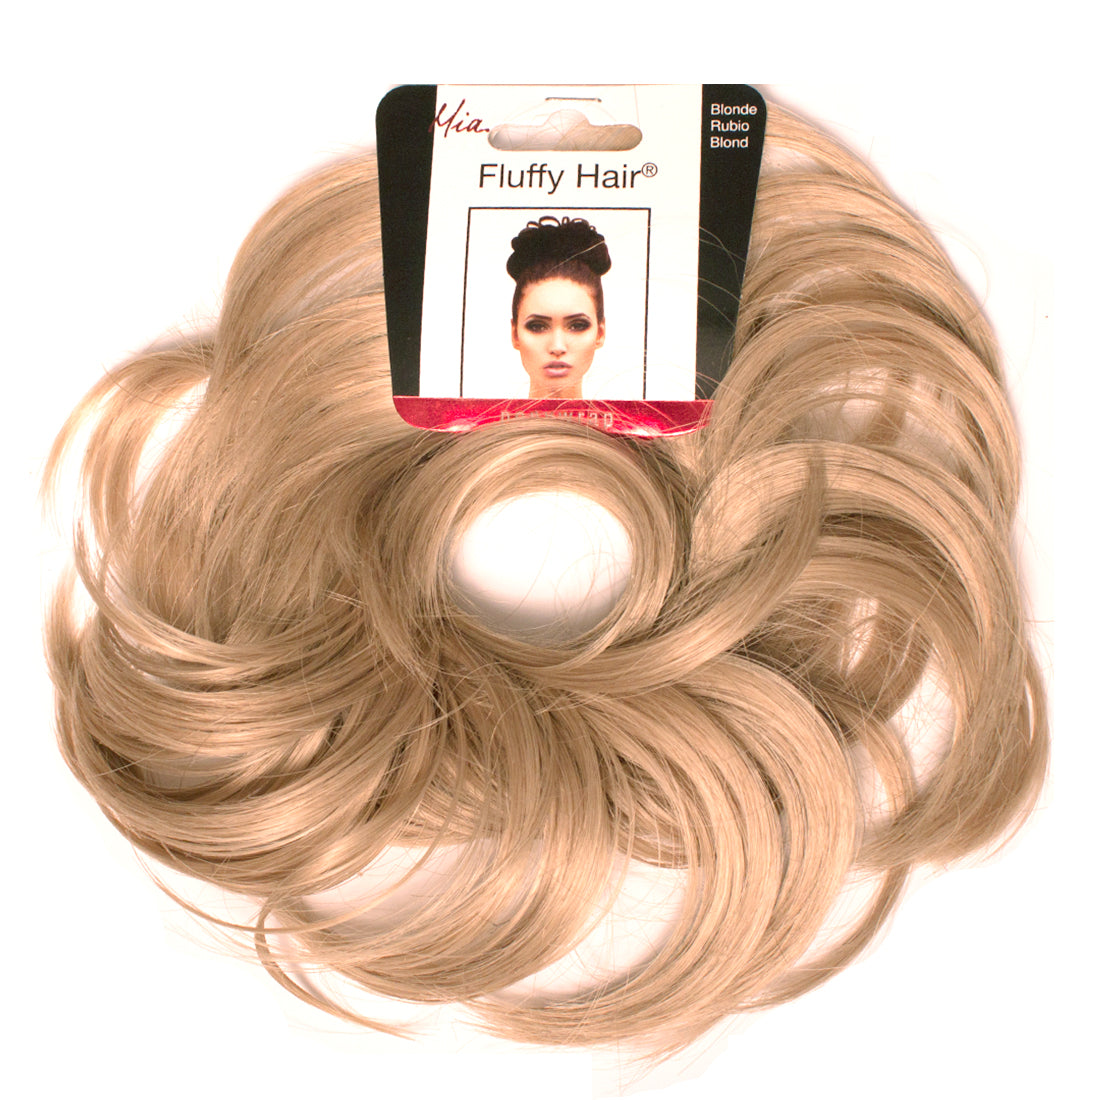 Mia® Fluffy Hair Ponywrap on packaging - blonde color - #MiaKaminski of #MiaBeauty